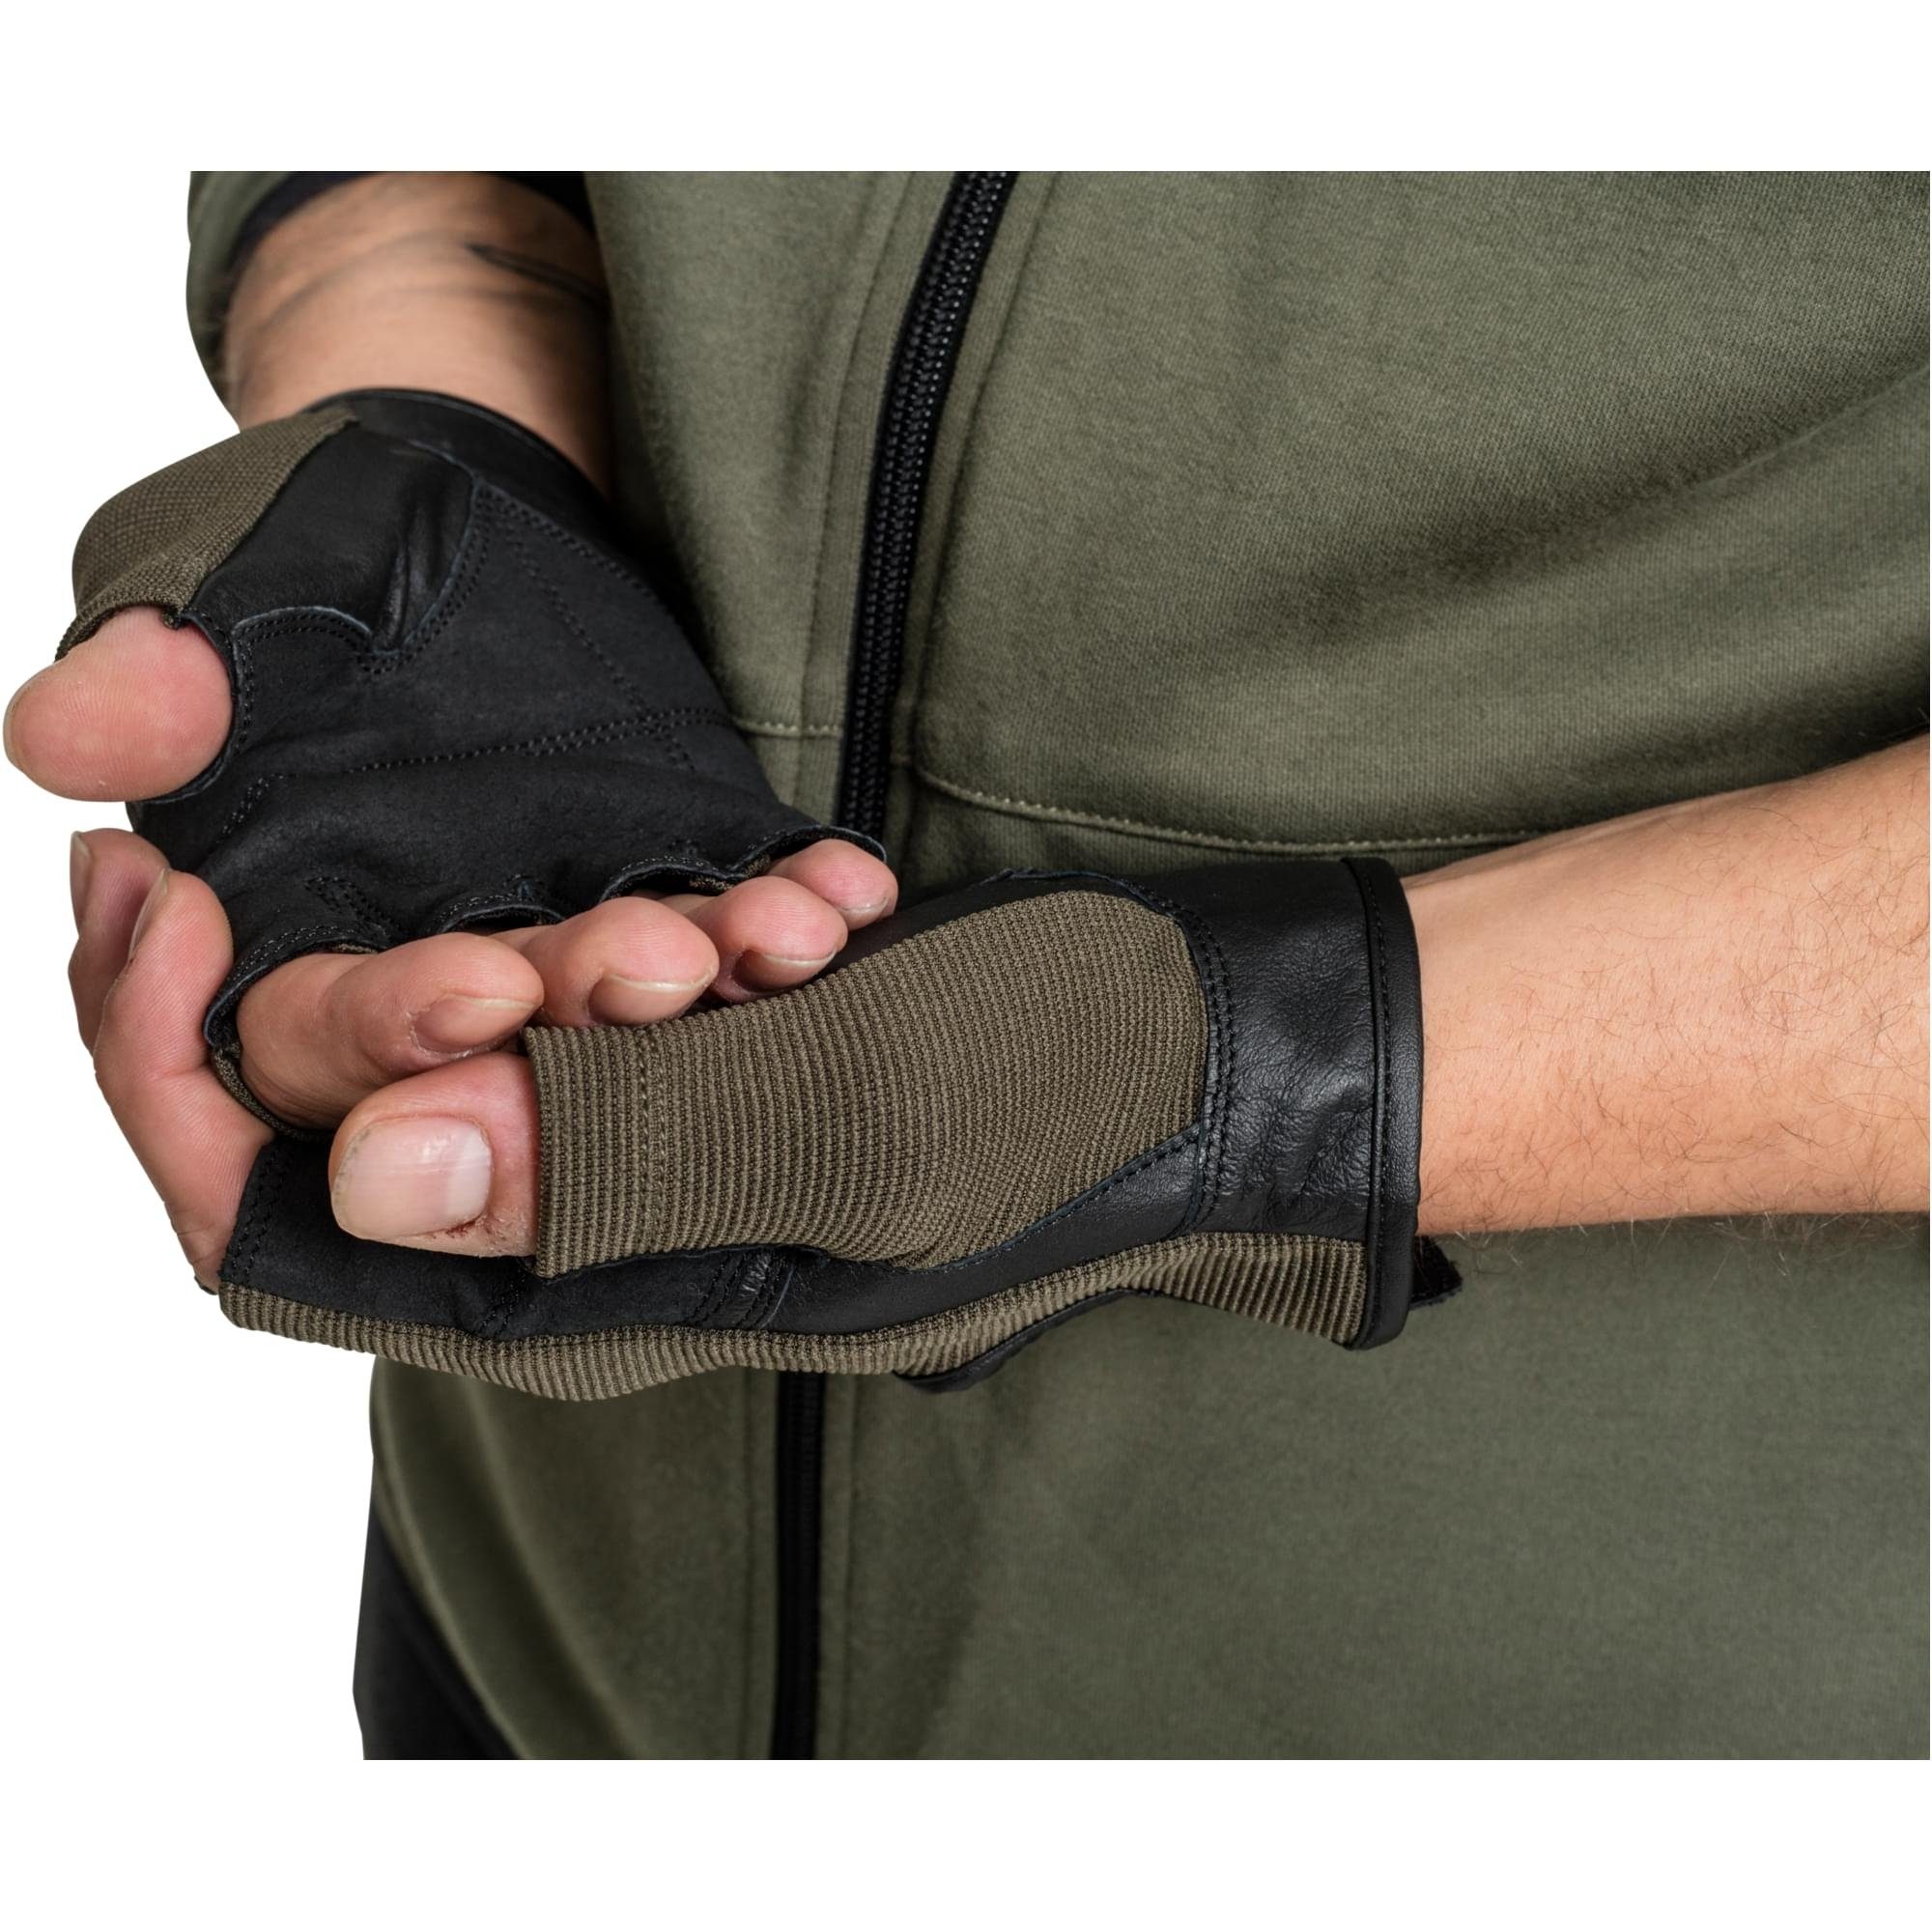 GORILLA SPORTS Trainingshandschuhe Leder, - Khaki - Handschuhe XS/S/M/L/XL, Farbwahl Fitness Sporthandschuhe